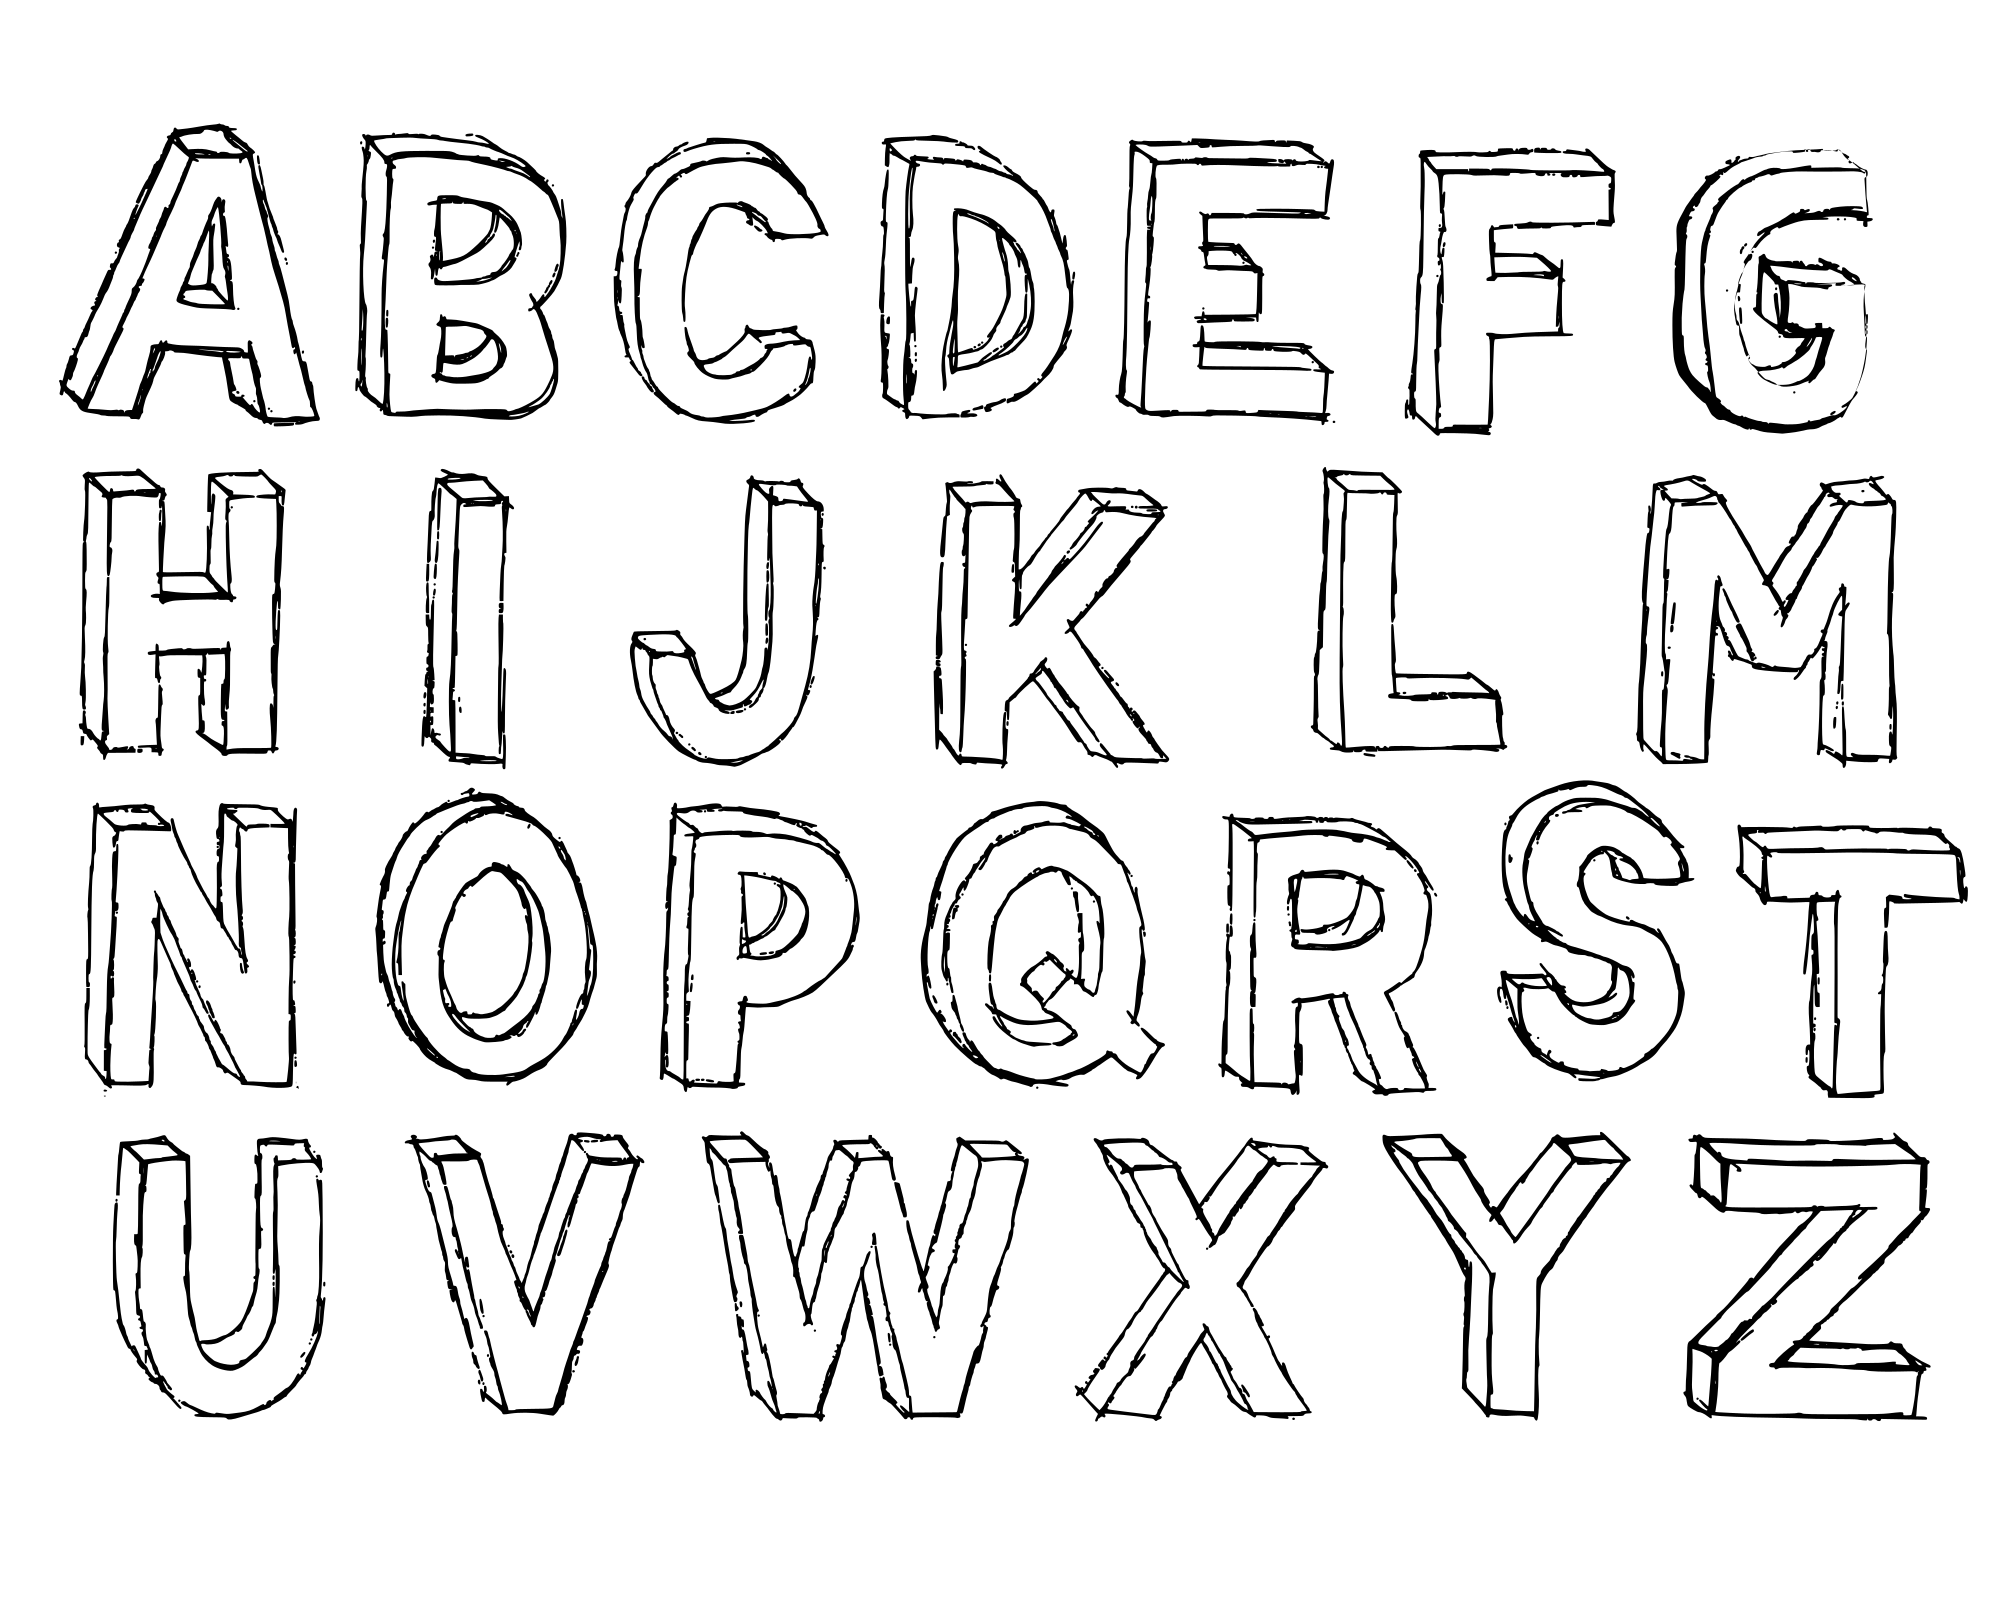 Pencil Sketches of Alphabets